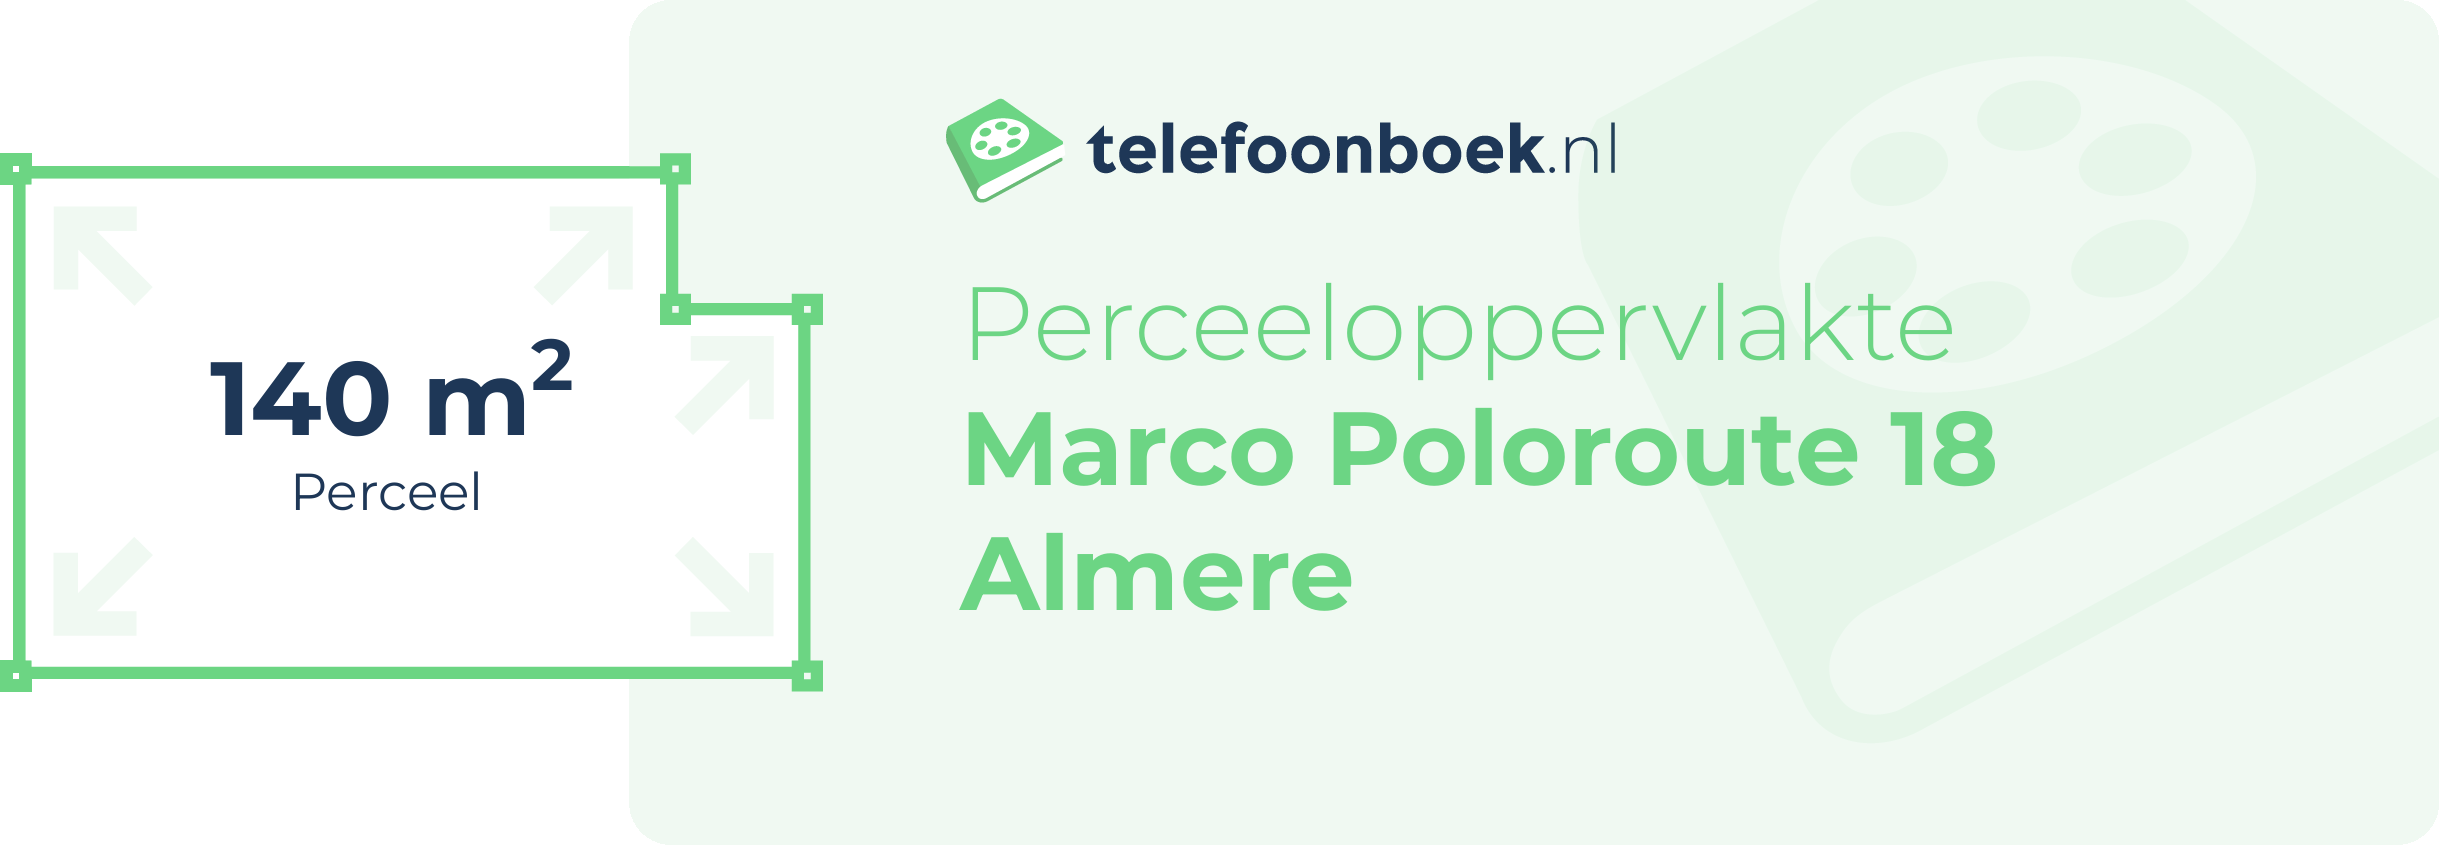 Perceeloppervlakte Marco Poloroute 18 Almere